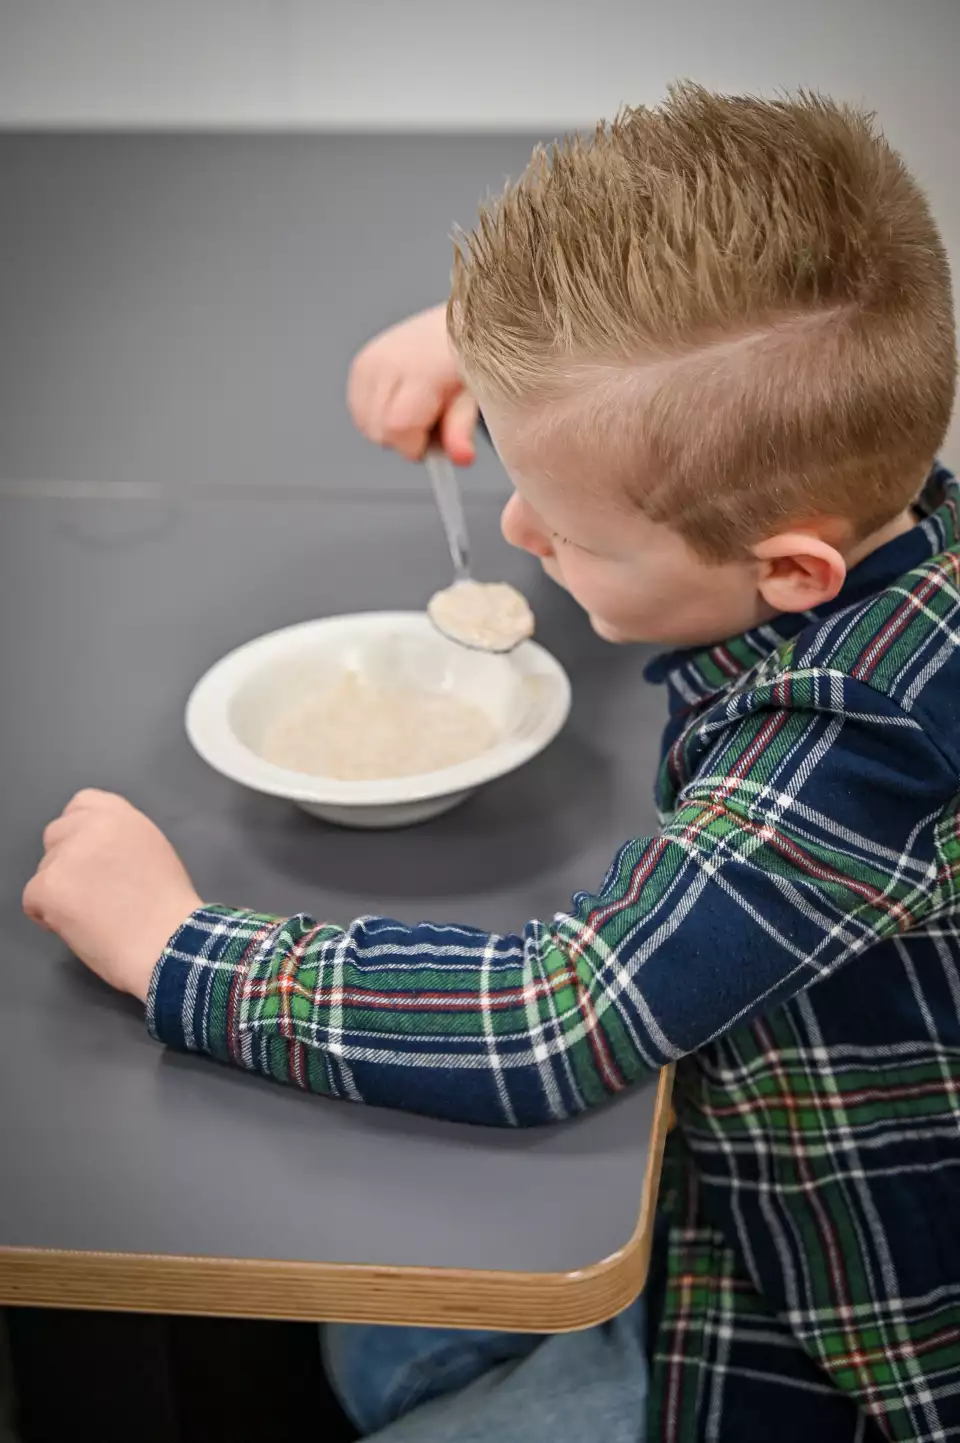 Asda Cafes are offering free porridge for children this February half term